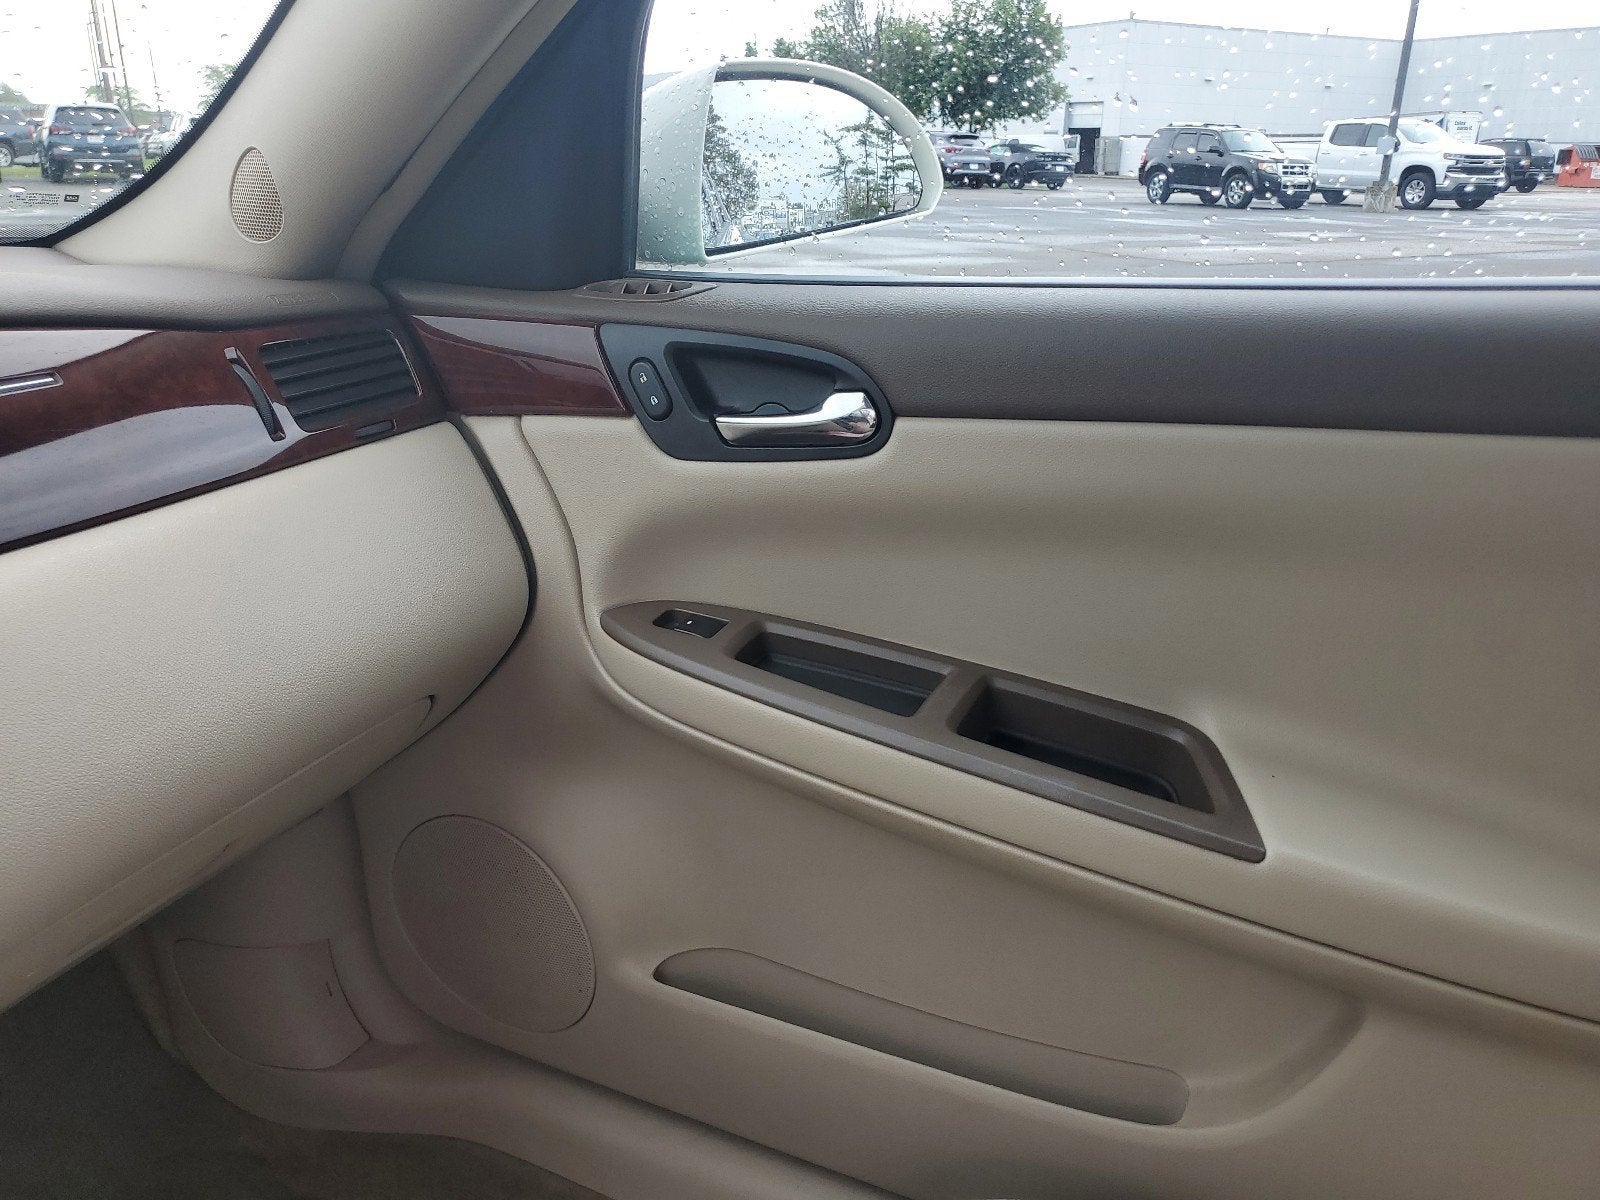 2007 Chevrolet Impala LS